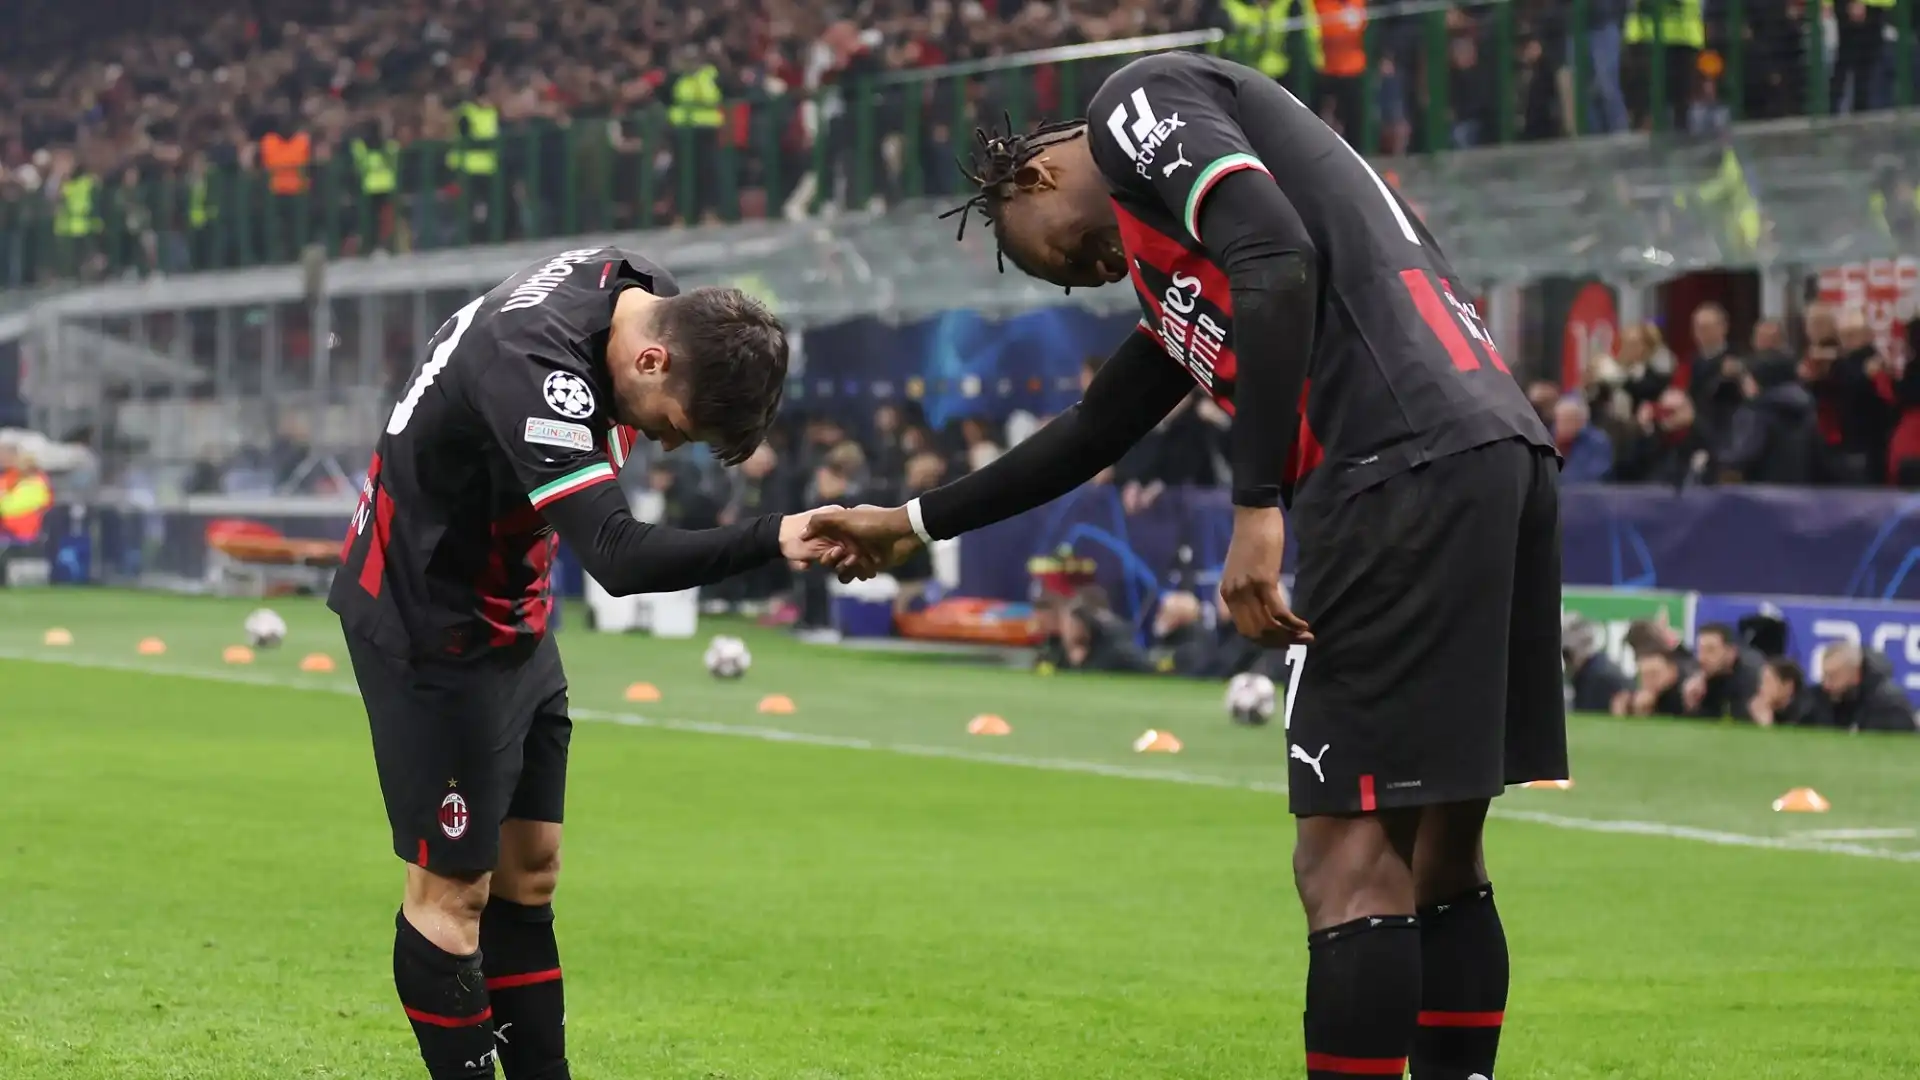 Il Milan ha battuto per 1-0 il Tottenham grazie ad una rete di Brahim Diaz